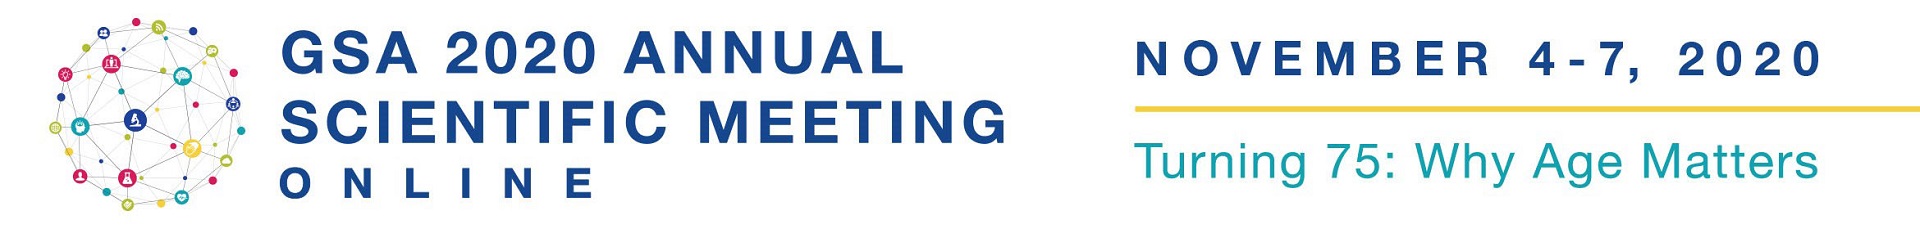 2020 GSA Annual Scientific Meeting Event Banner